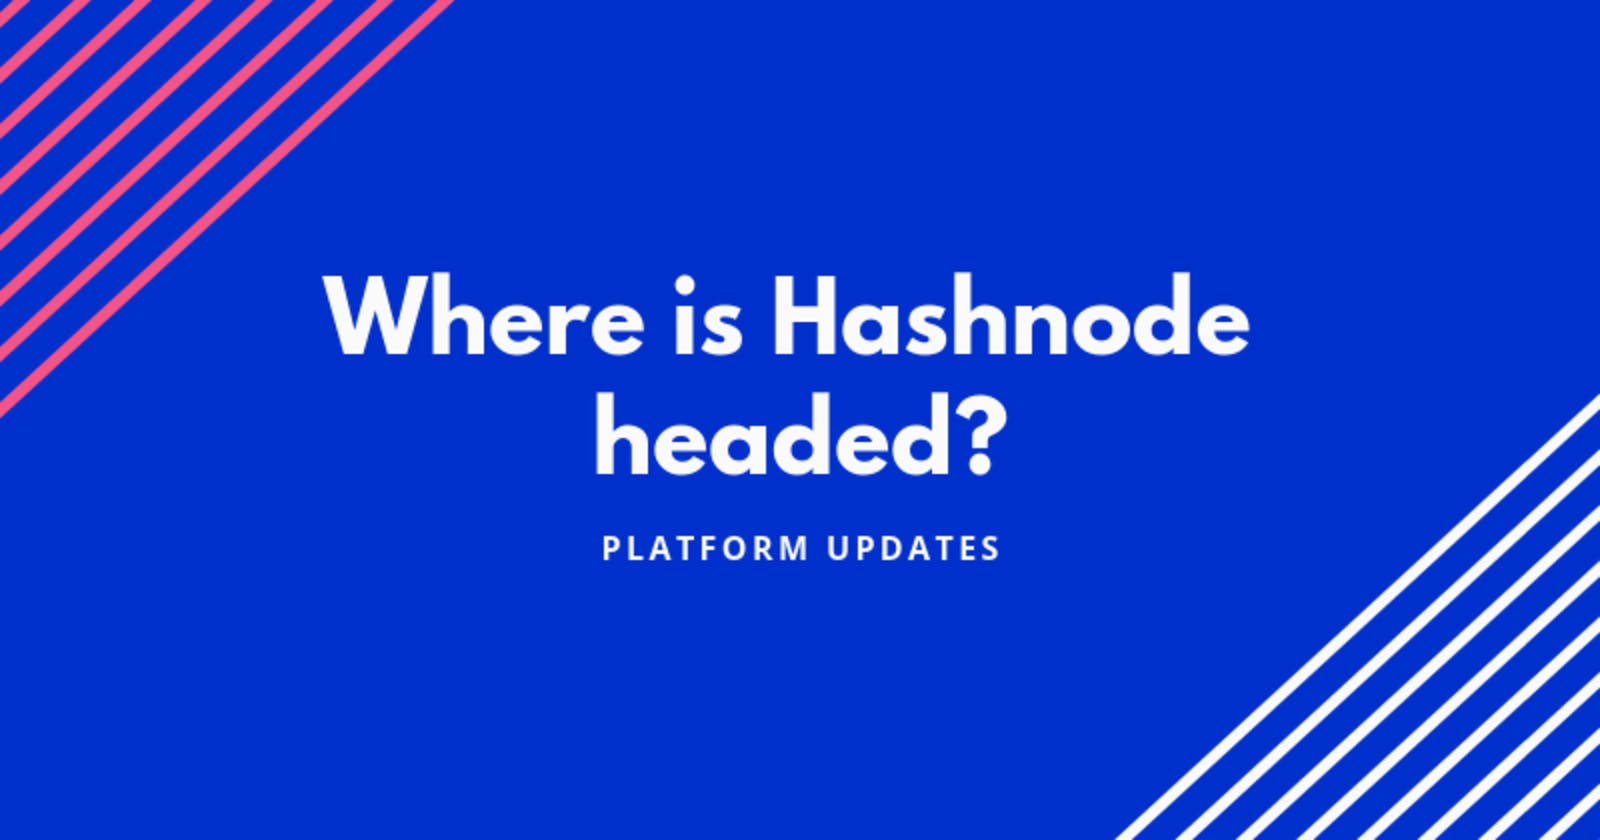 Platform Updates: Where is Hashnode headed?